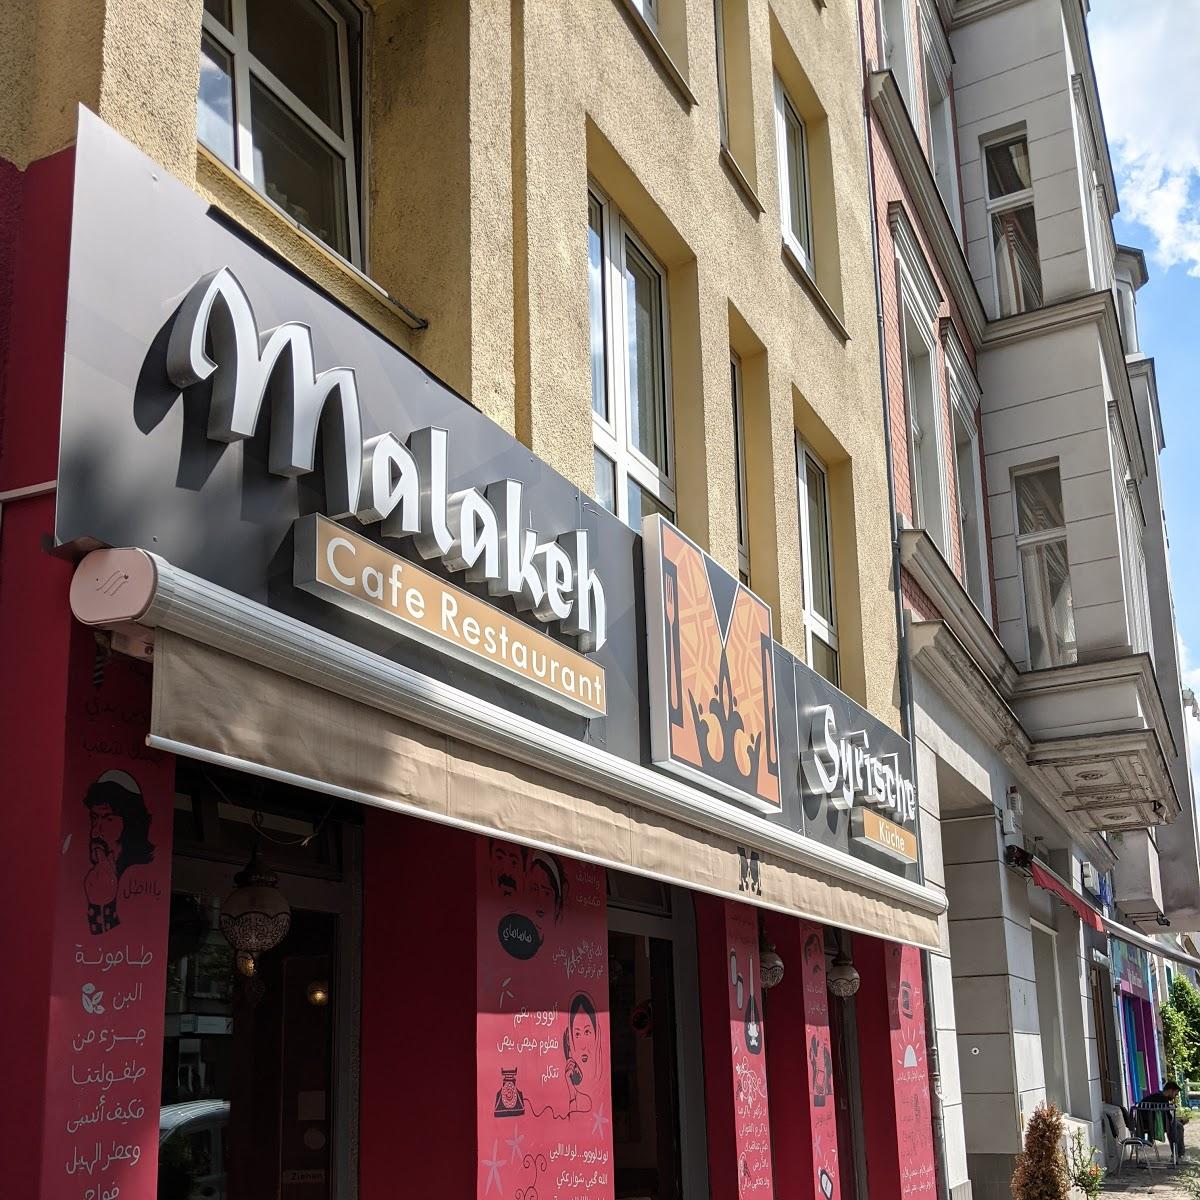 Restaurant "Malakeh Restaurant" in Berlin